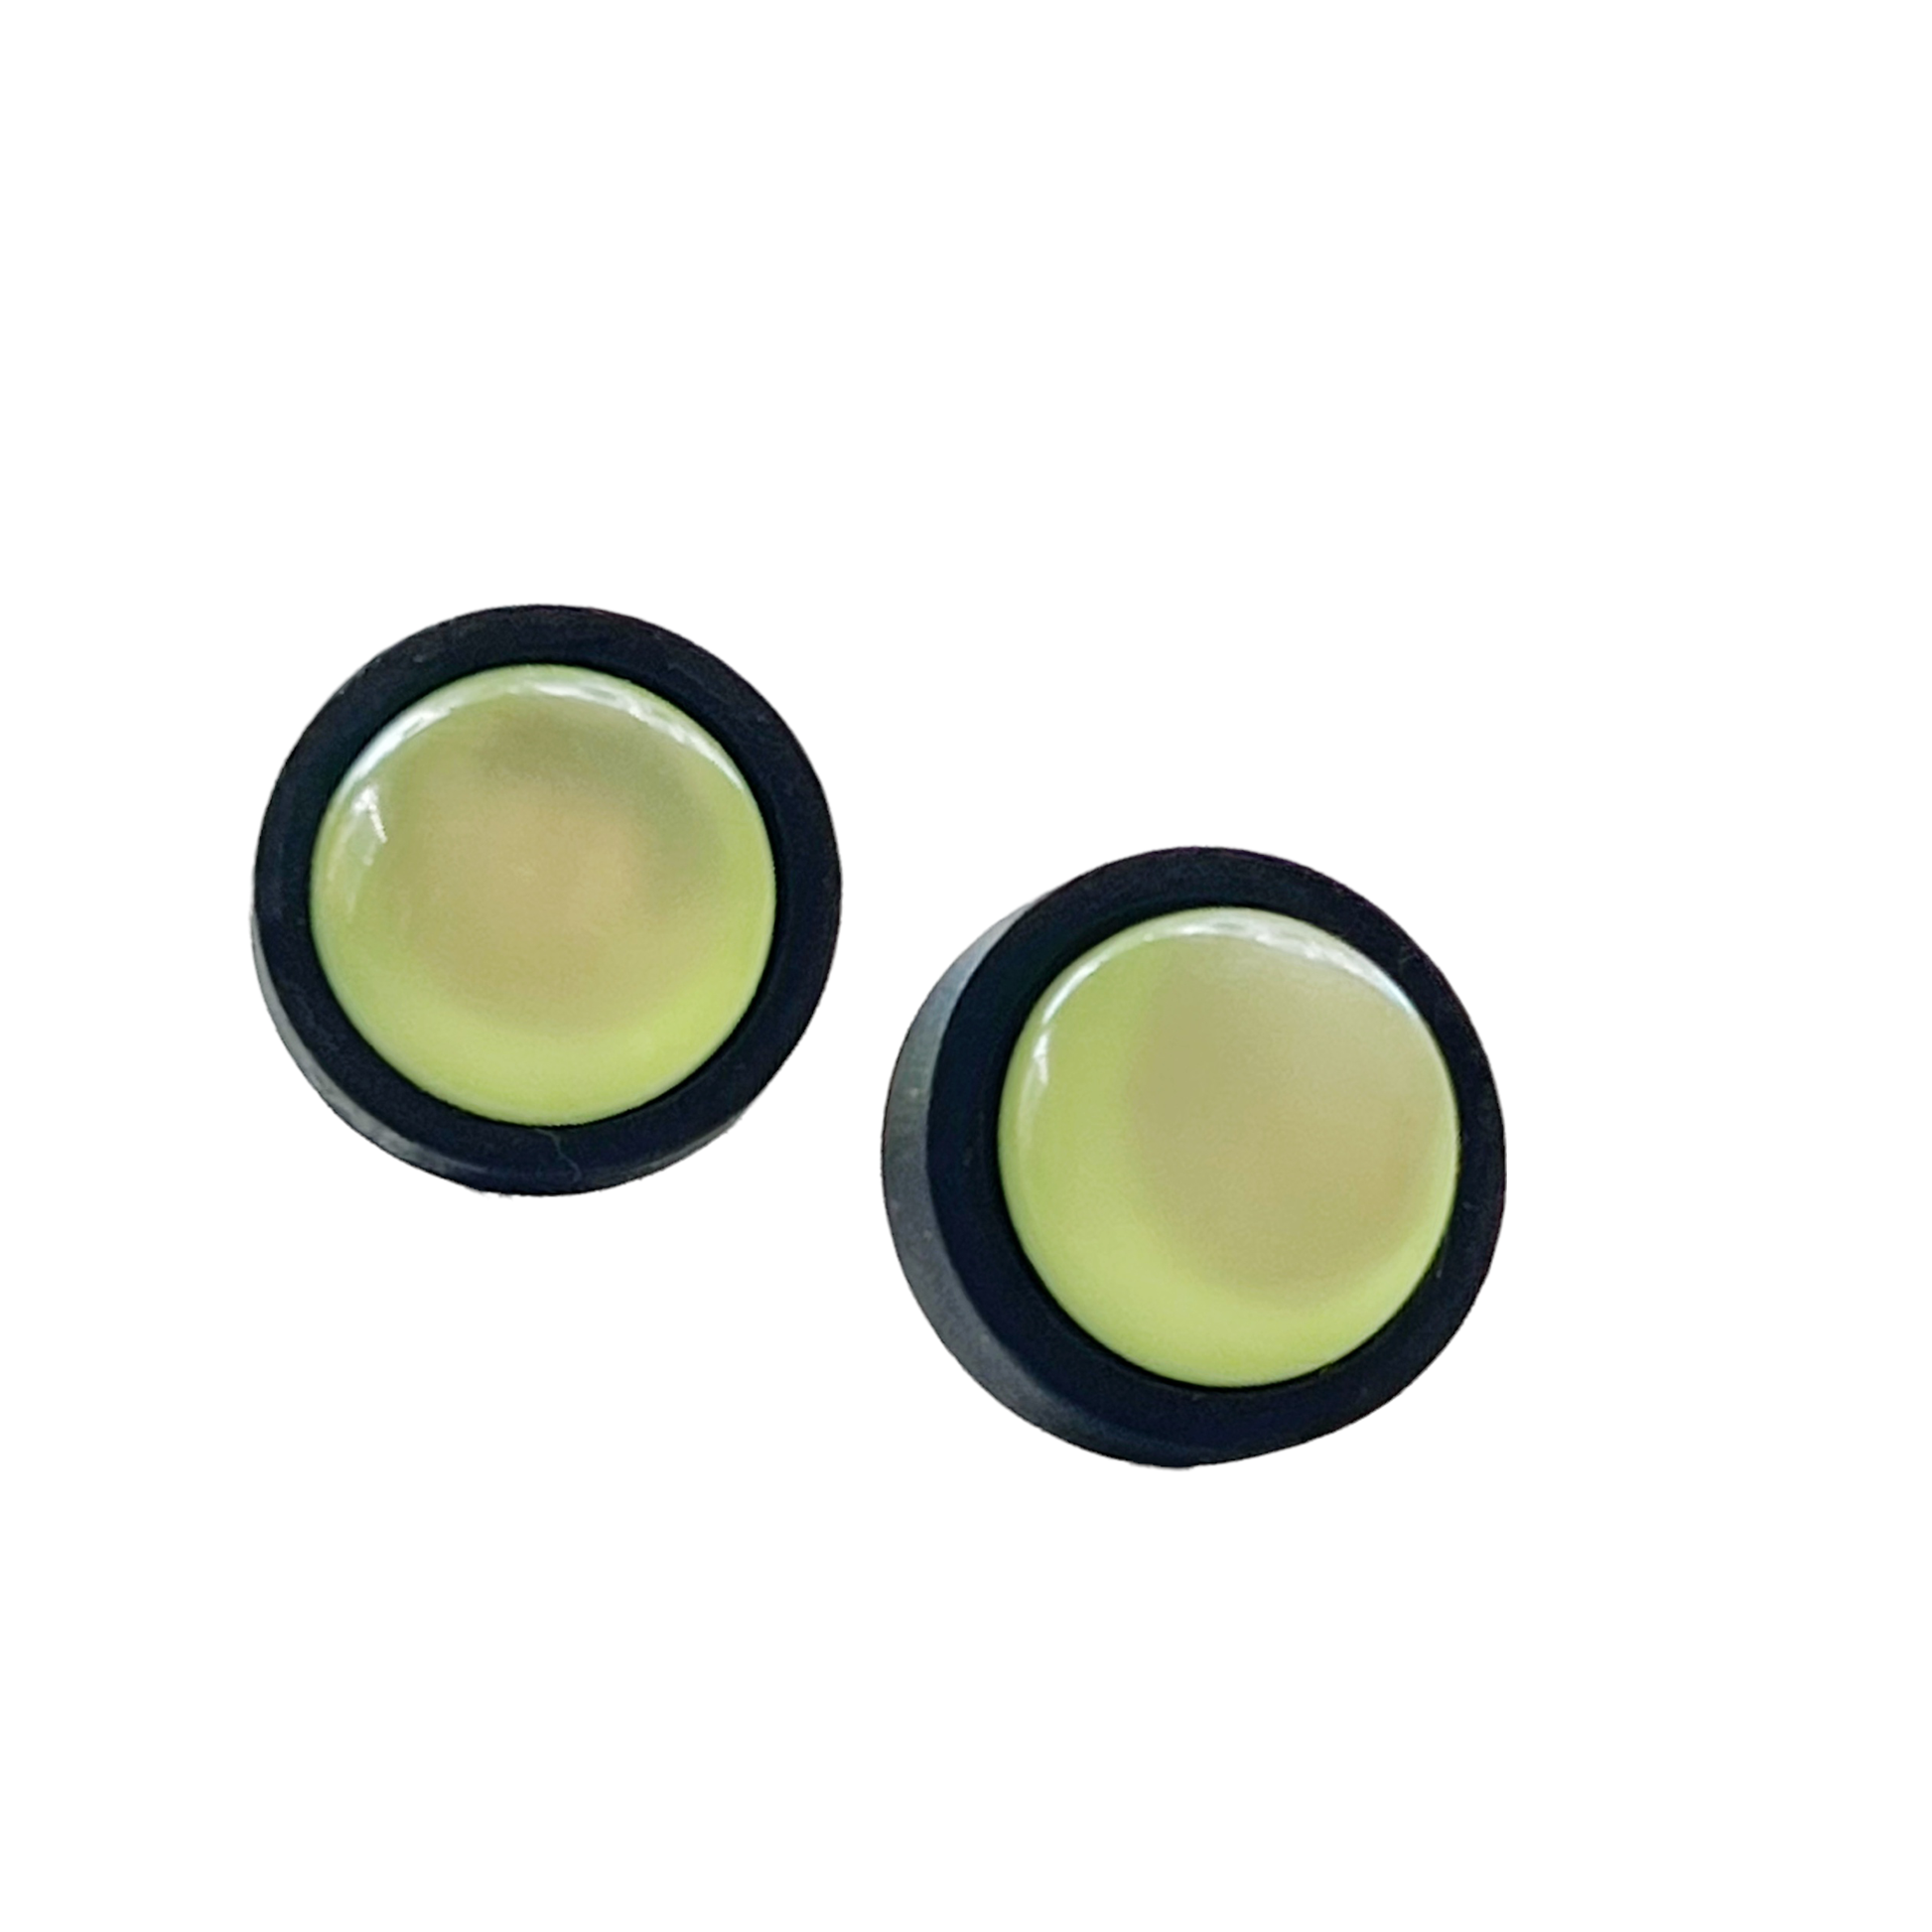 Green Resin Black Wood Unisex Stud Earrings - Stylish & Versatile Accessories